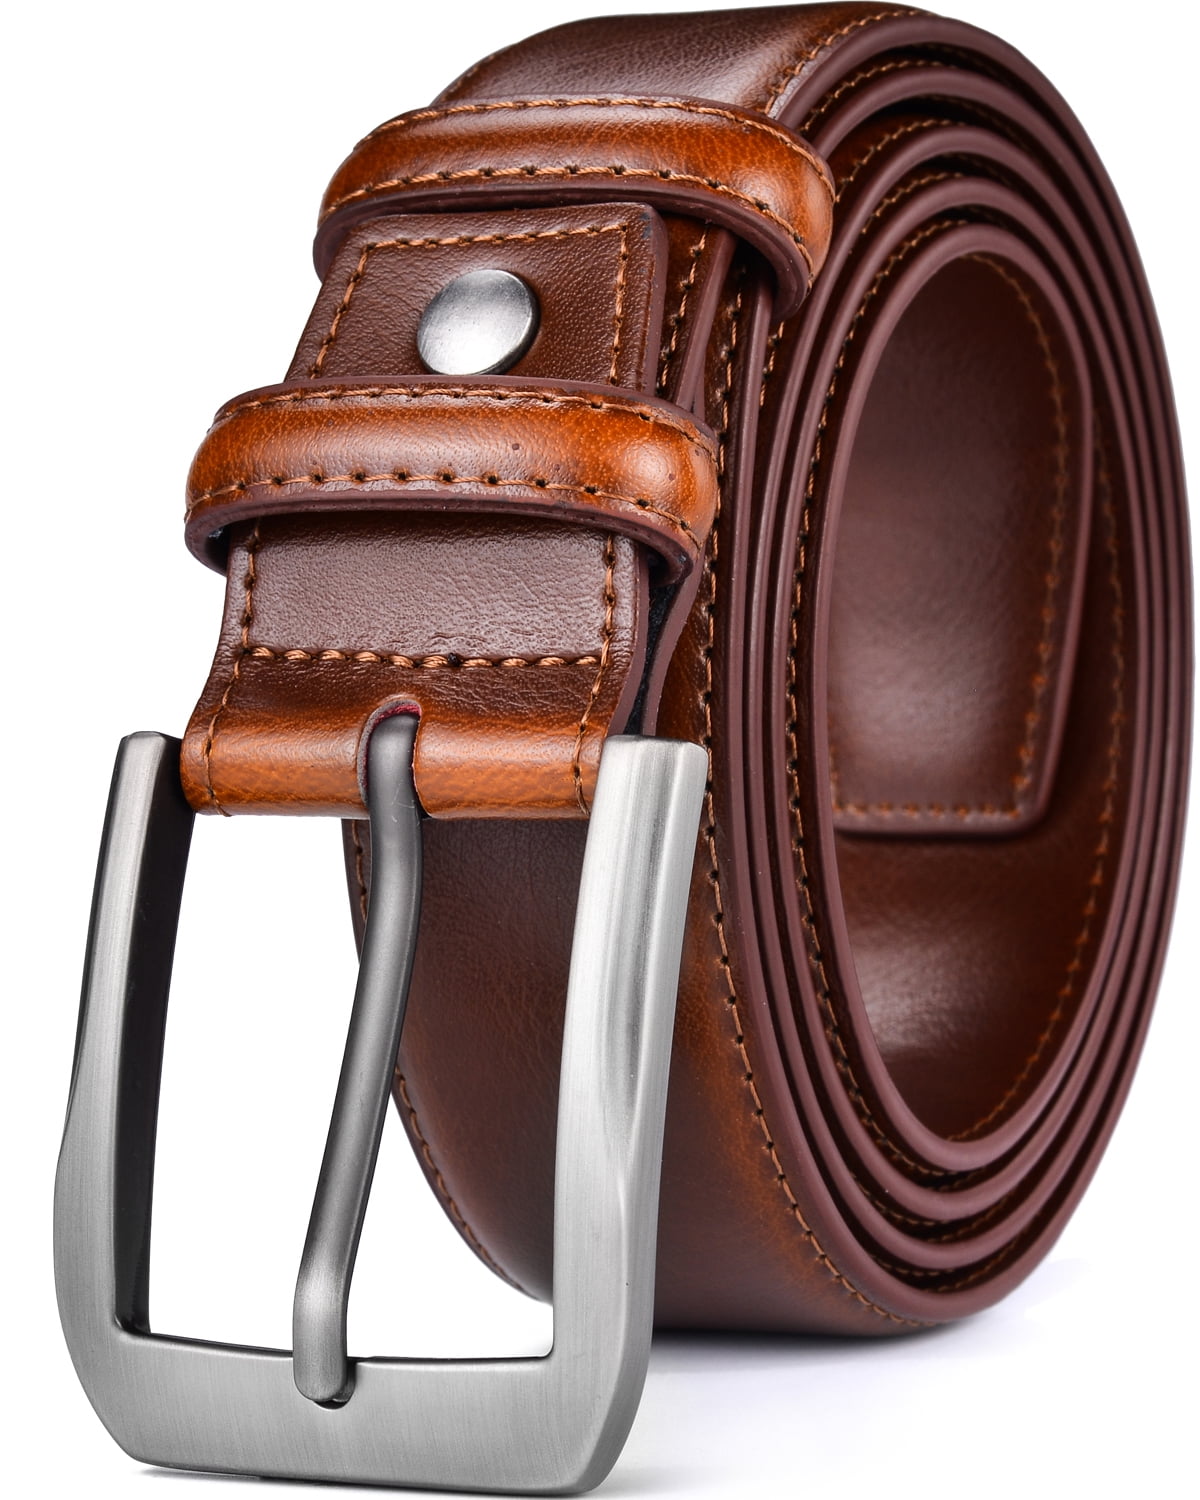 Beltox Fine Men’s Casual Leather Jeans Belts 1 1/2” Wide 4MM Thick Alloy Prong Buckle Work Dress Belt for Men 